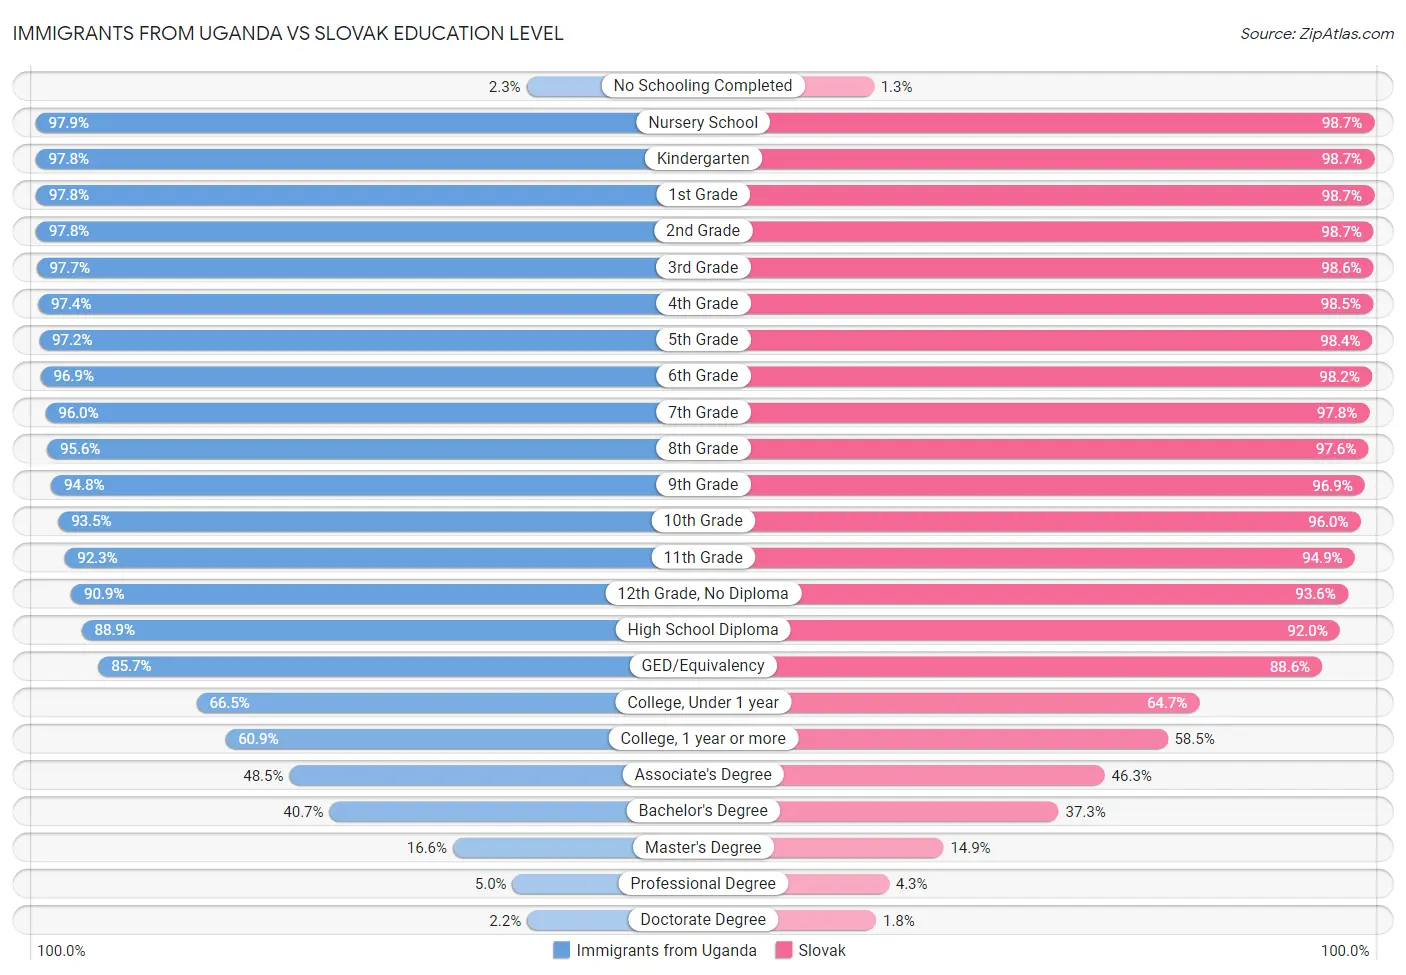 Immigrants from Uganda vs Slovak Education Level